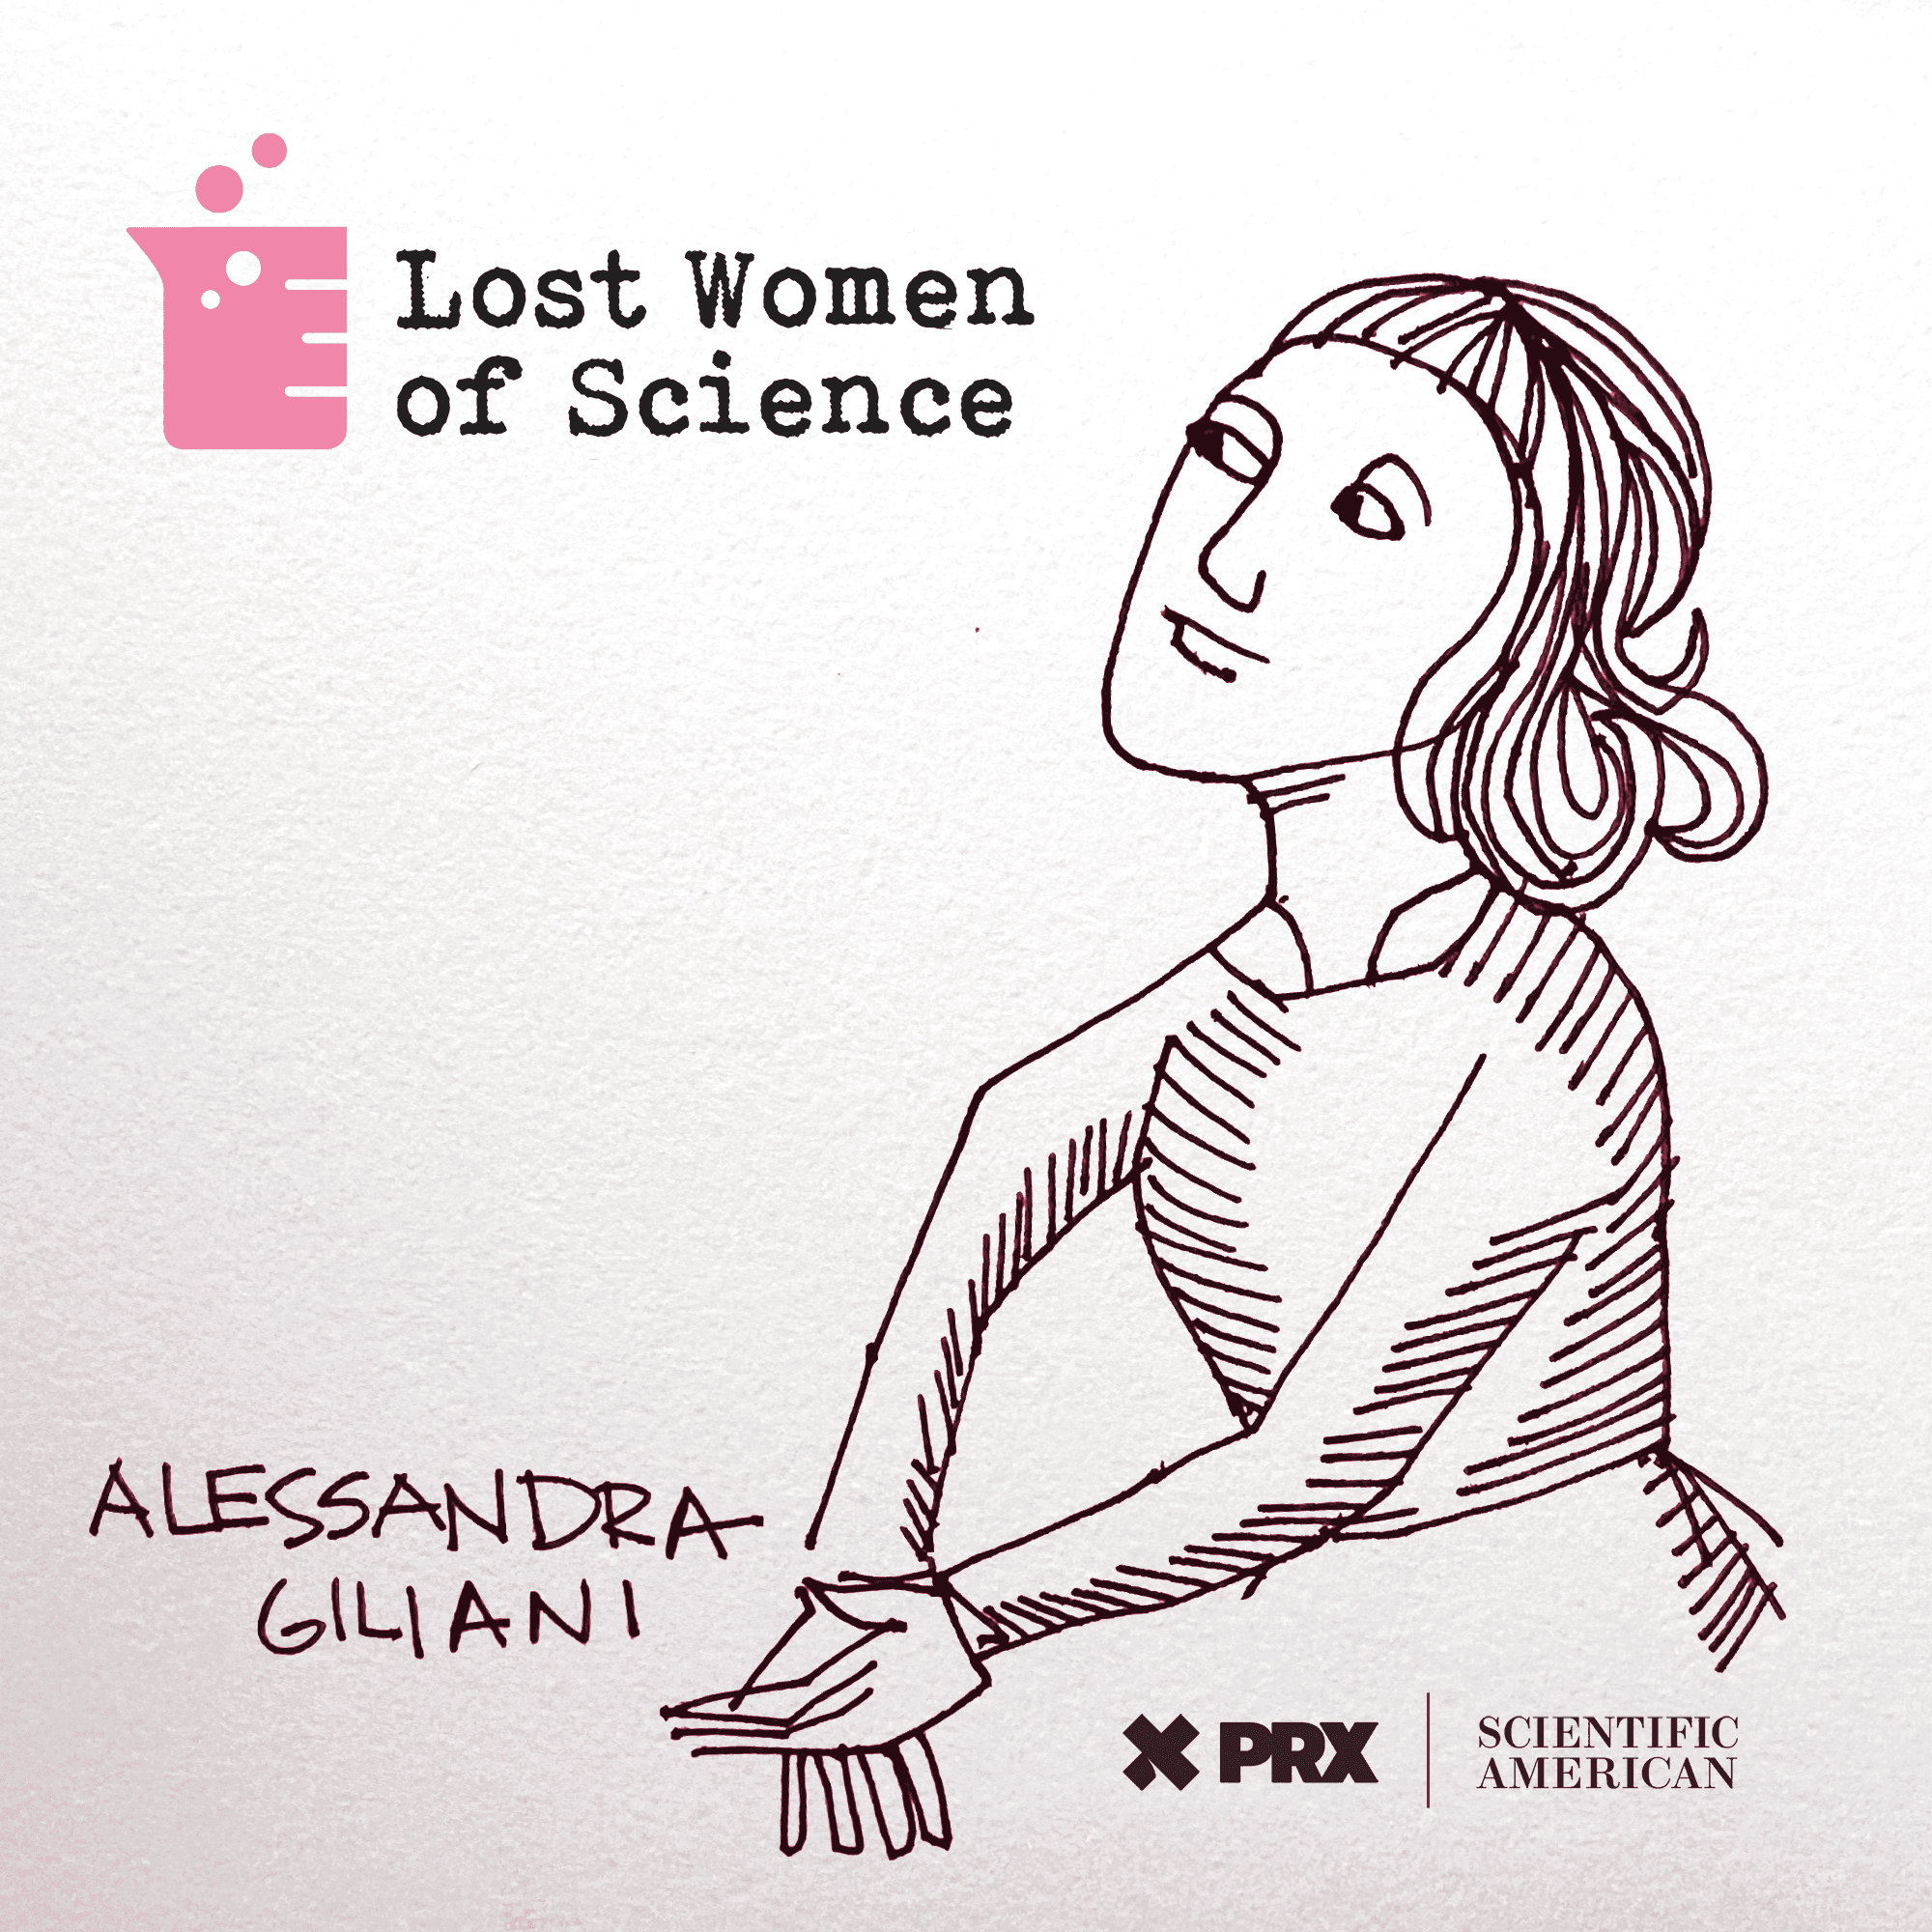 Thumbnail for "From Our Inbox: Alessandra Giliani, 14th-century Italian anatomist ".